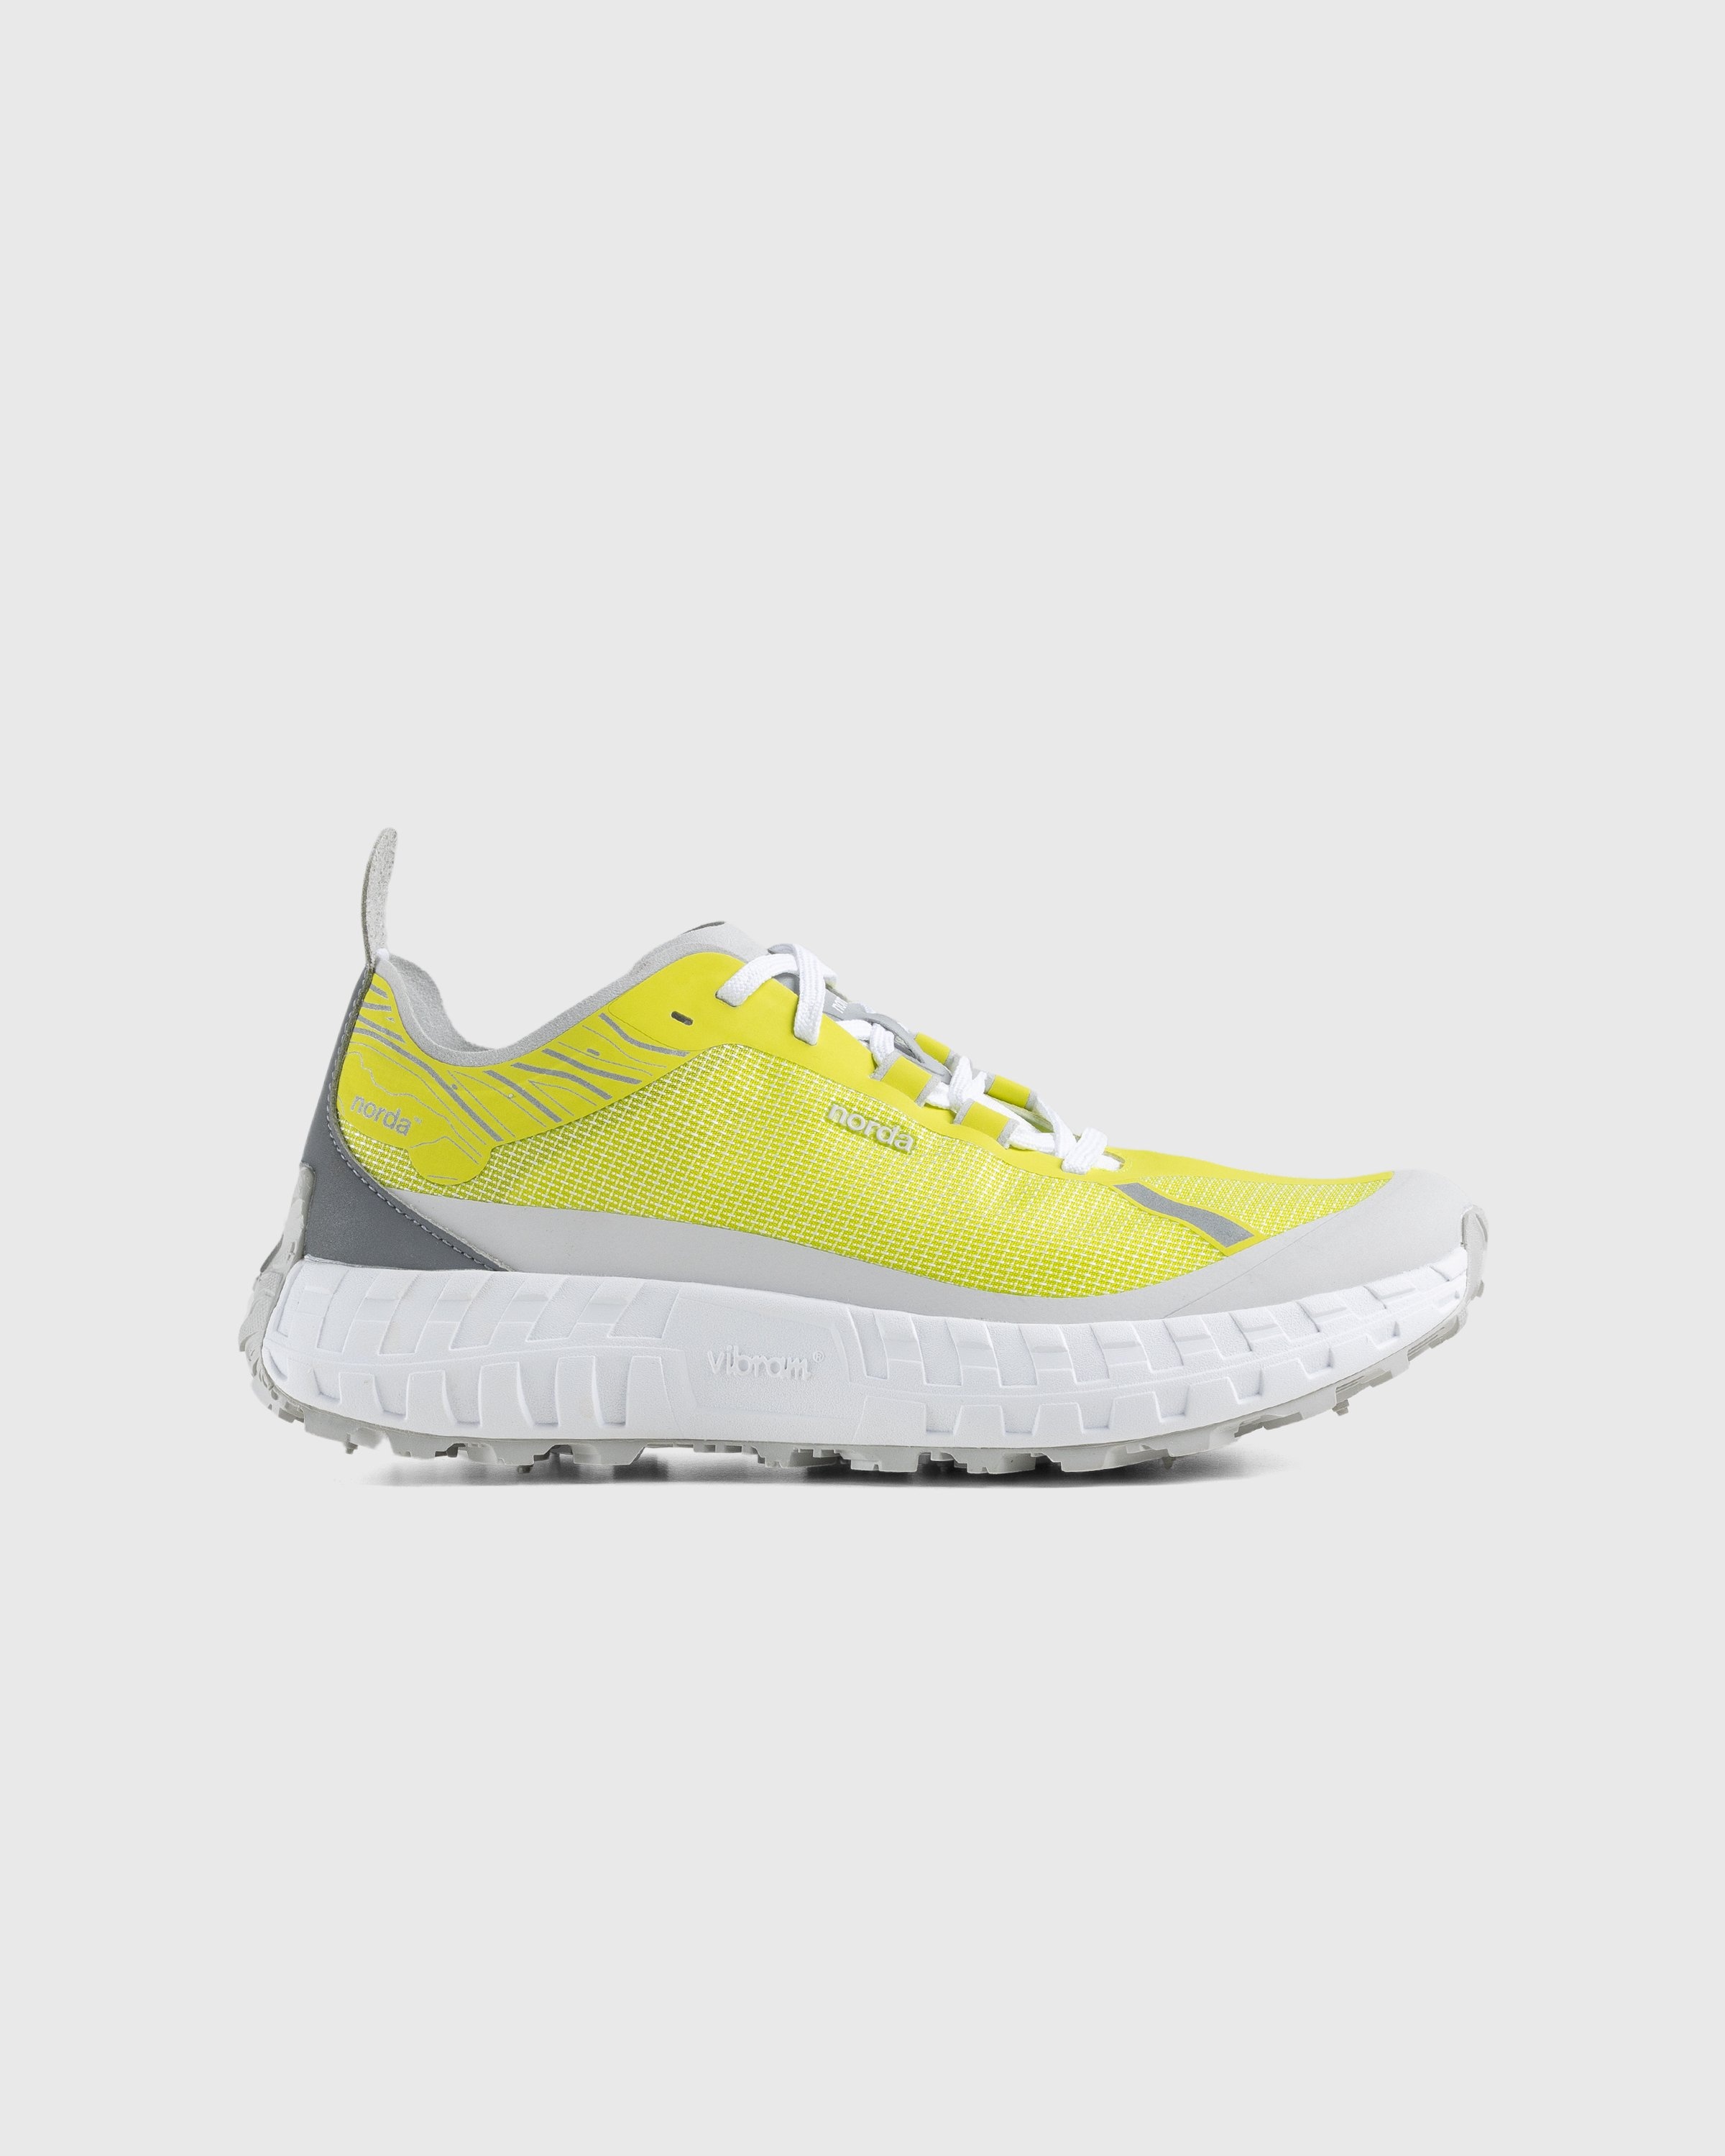 Norda – 001 M Sulphur - Low Top Sneakers - Yellow - Image 1